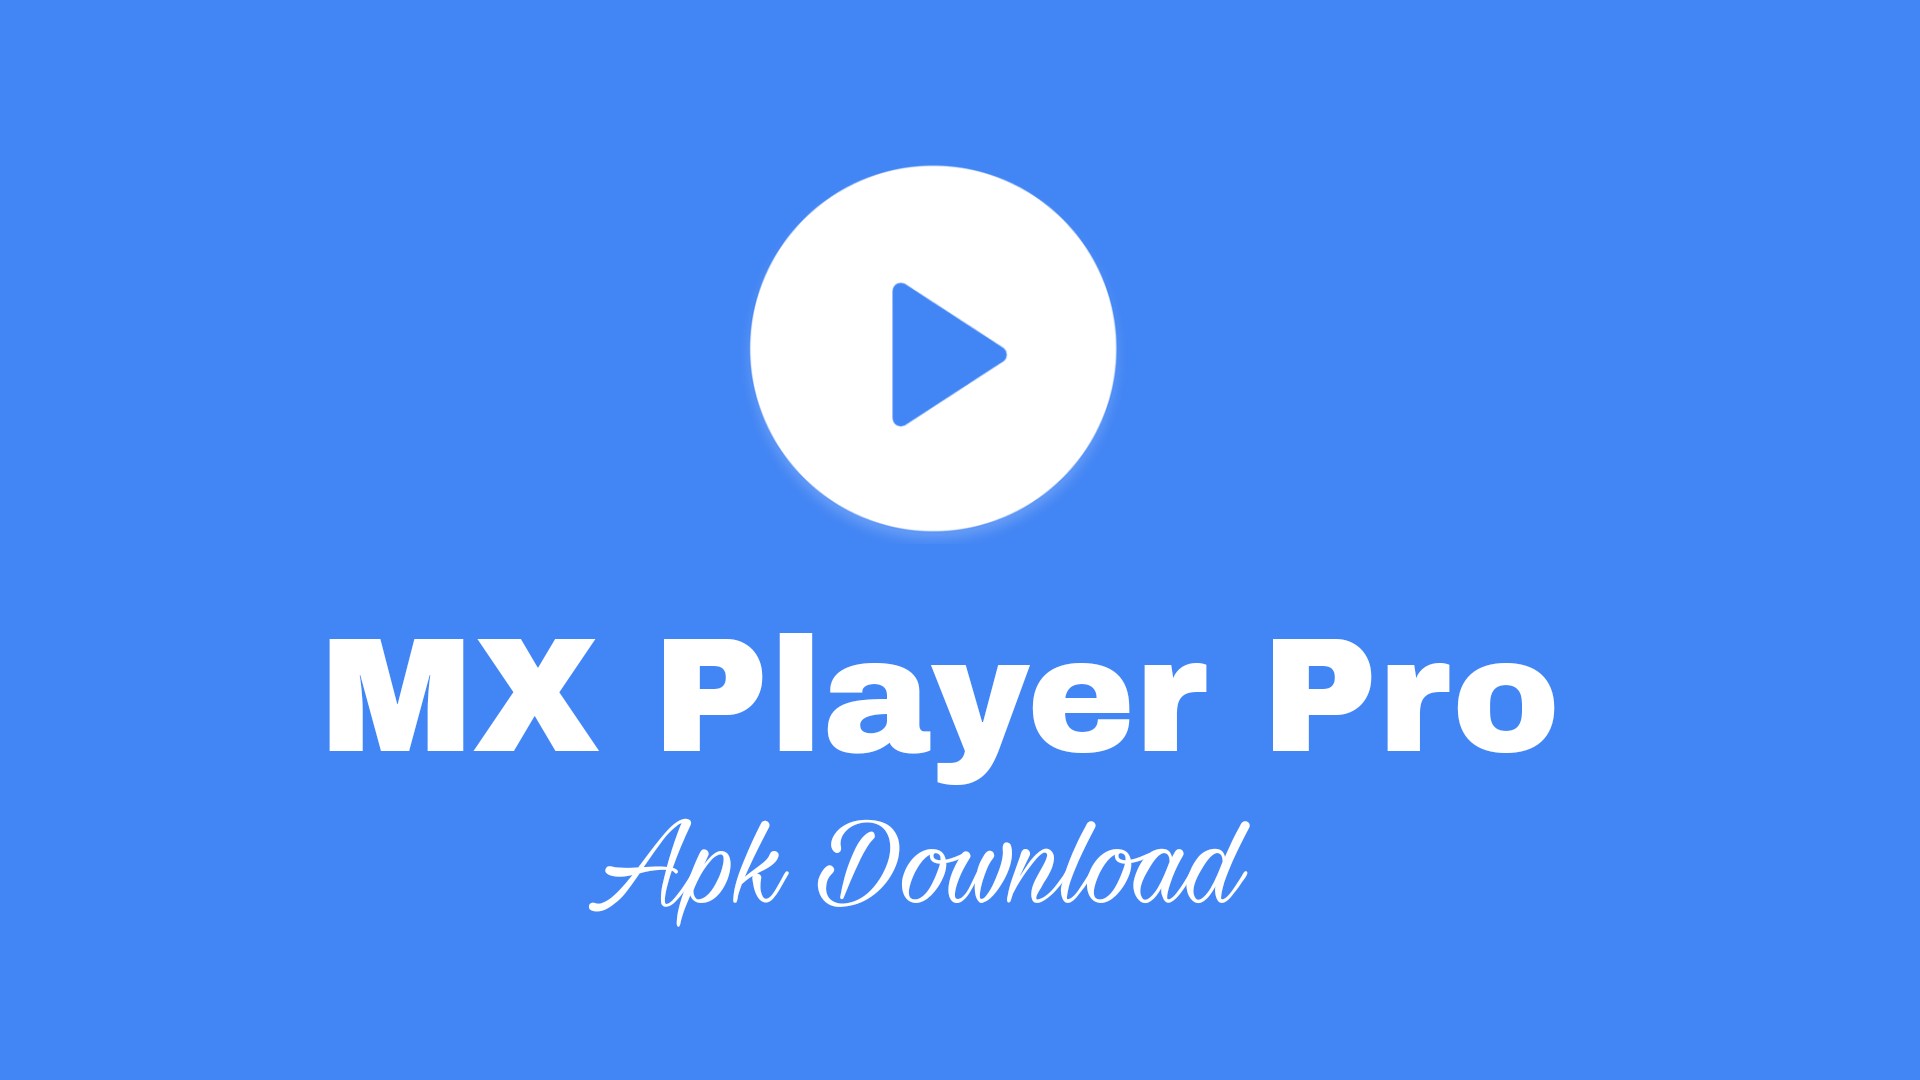 player pro full version apk